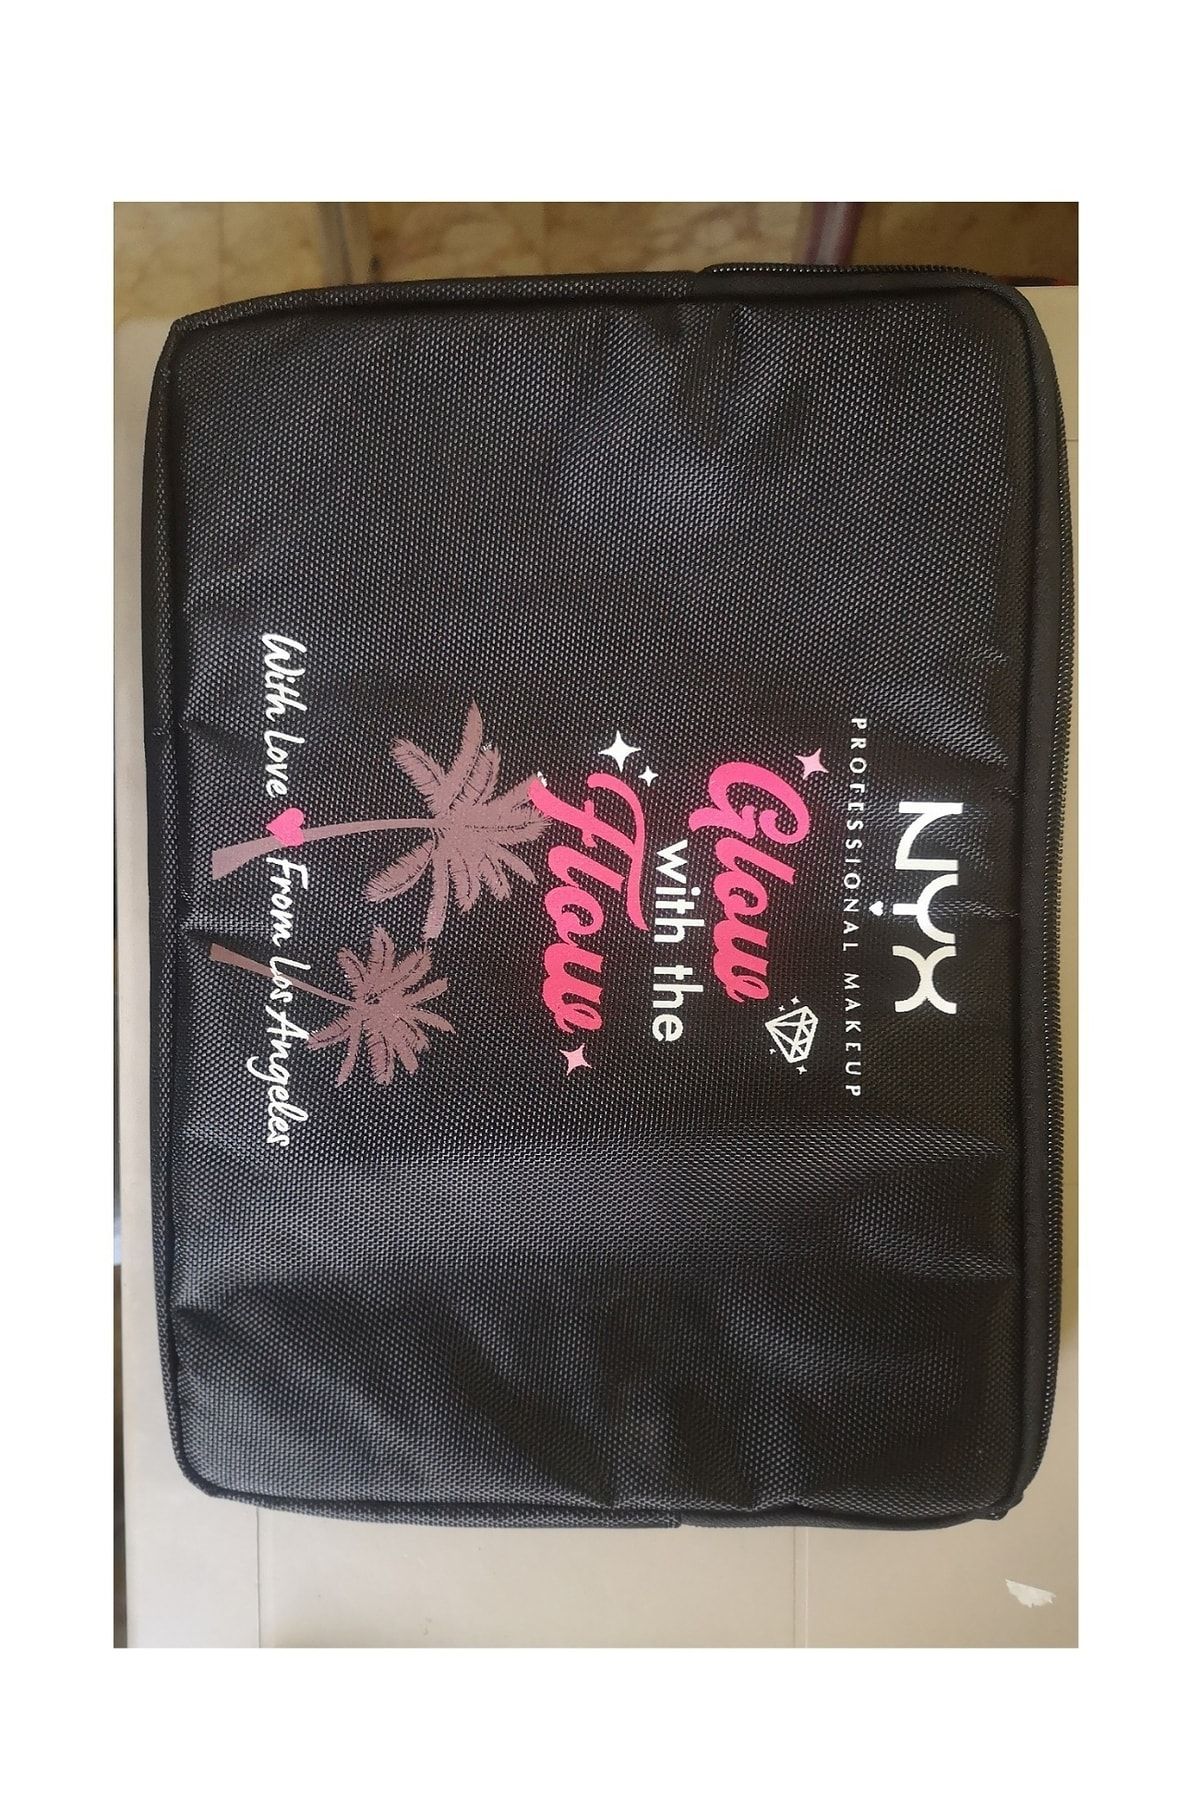 NYX Professional Makeup کیف آرایشی سیاه با طراحی شیک و مناسب برای محصولات آرایشی